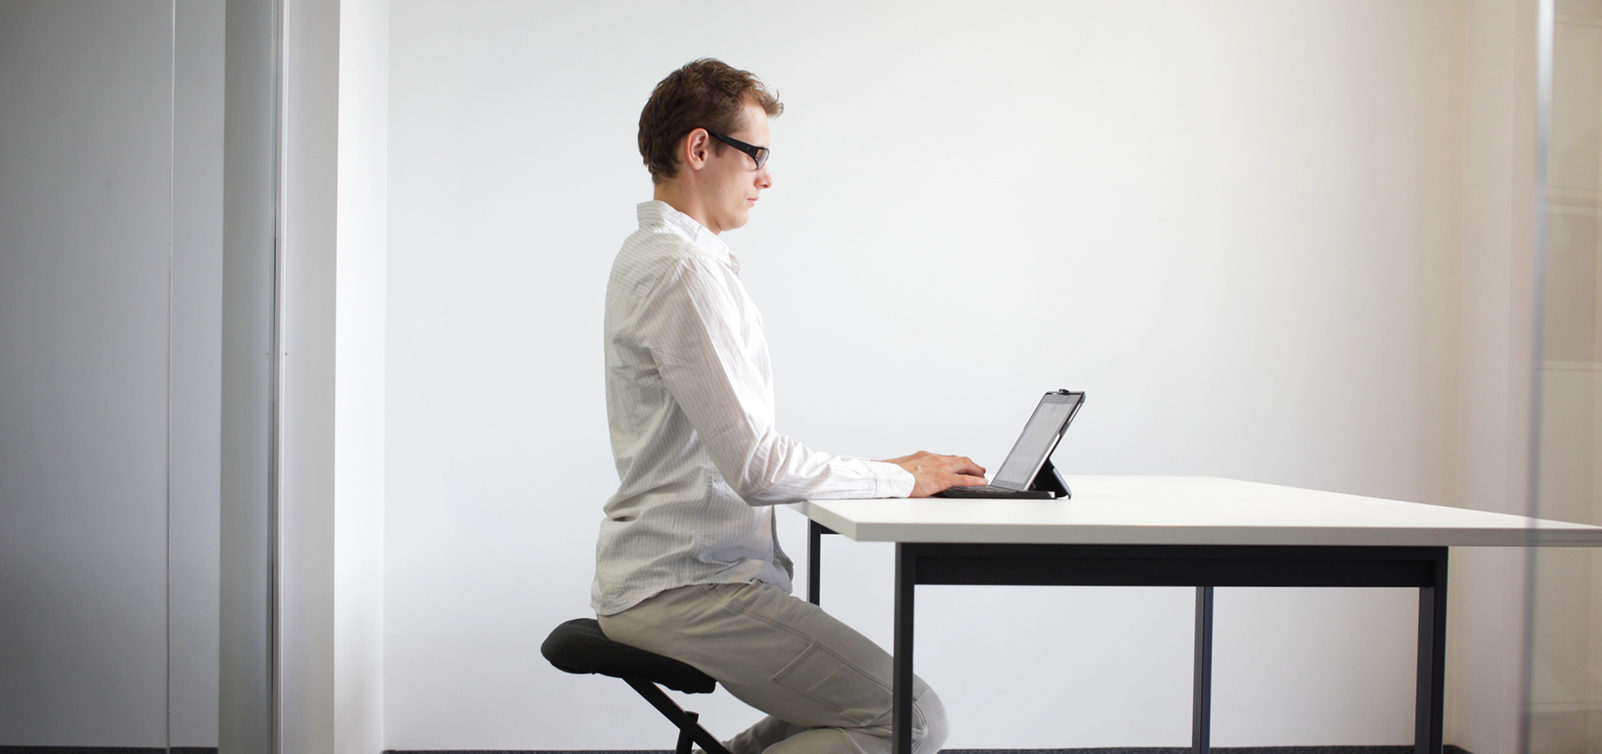 4 ways to turn good posture into less back pain - Harvard Health